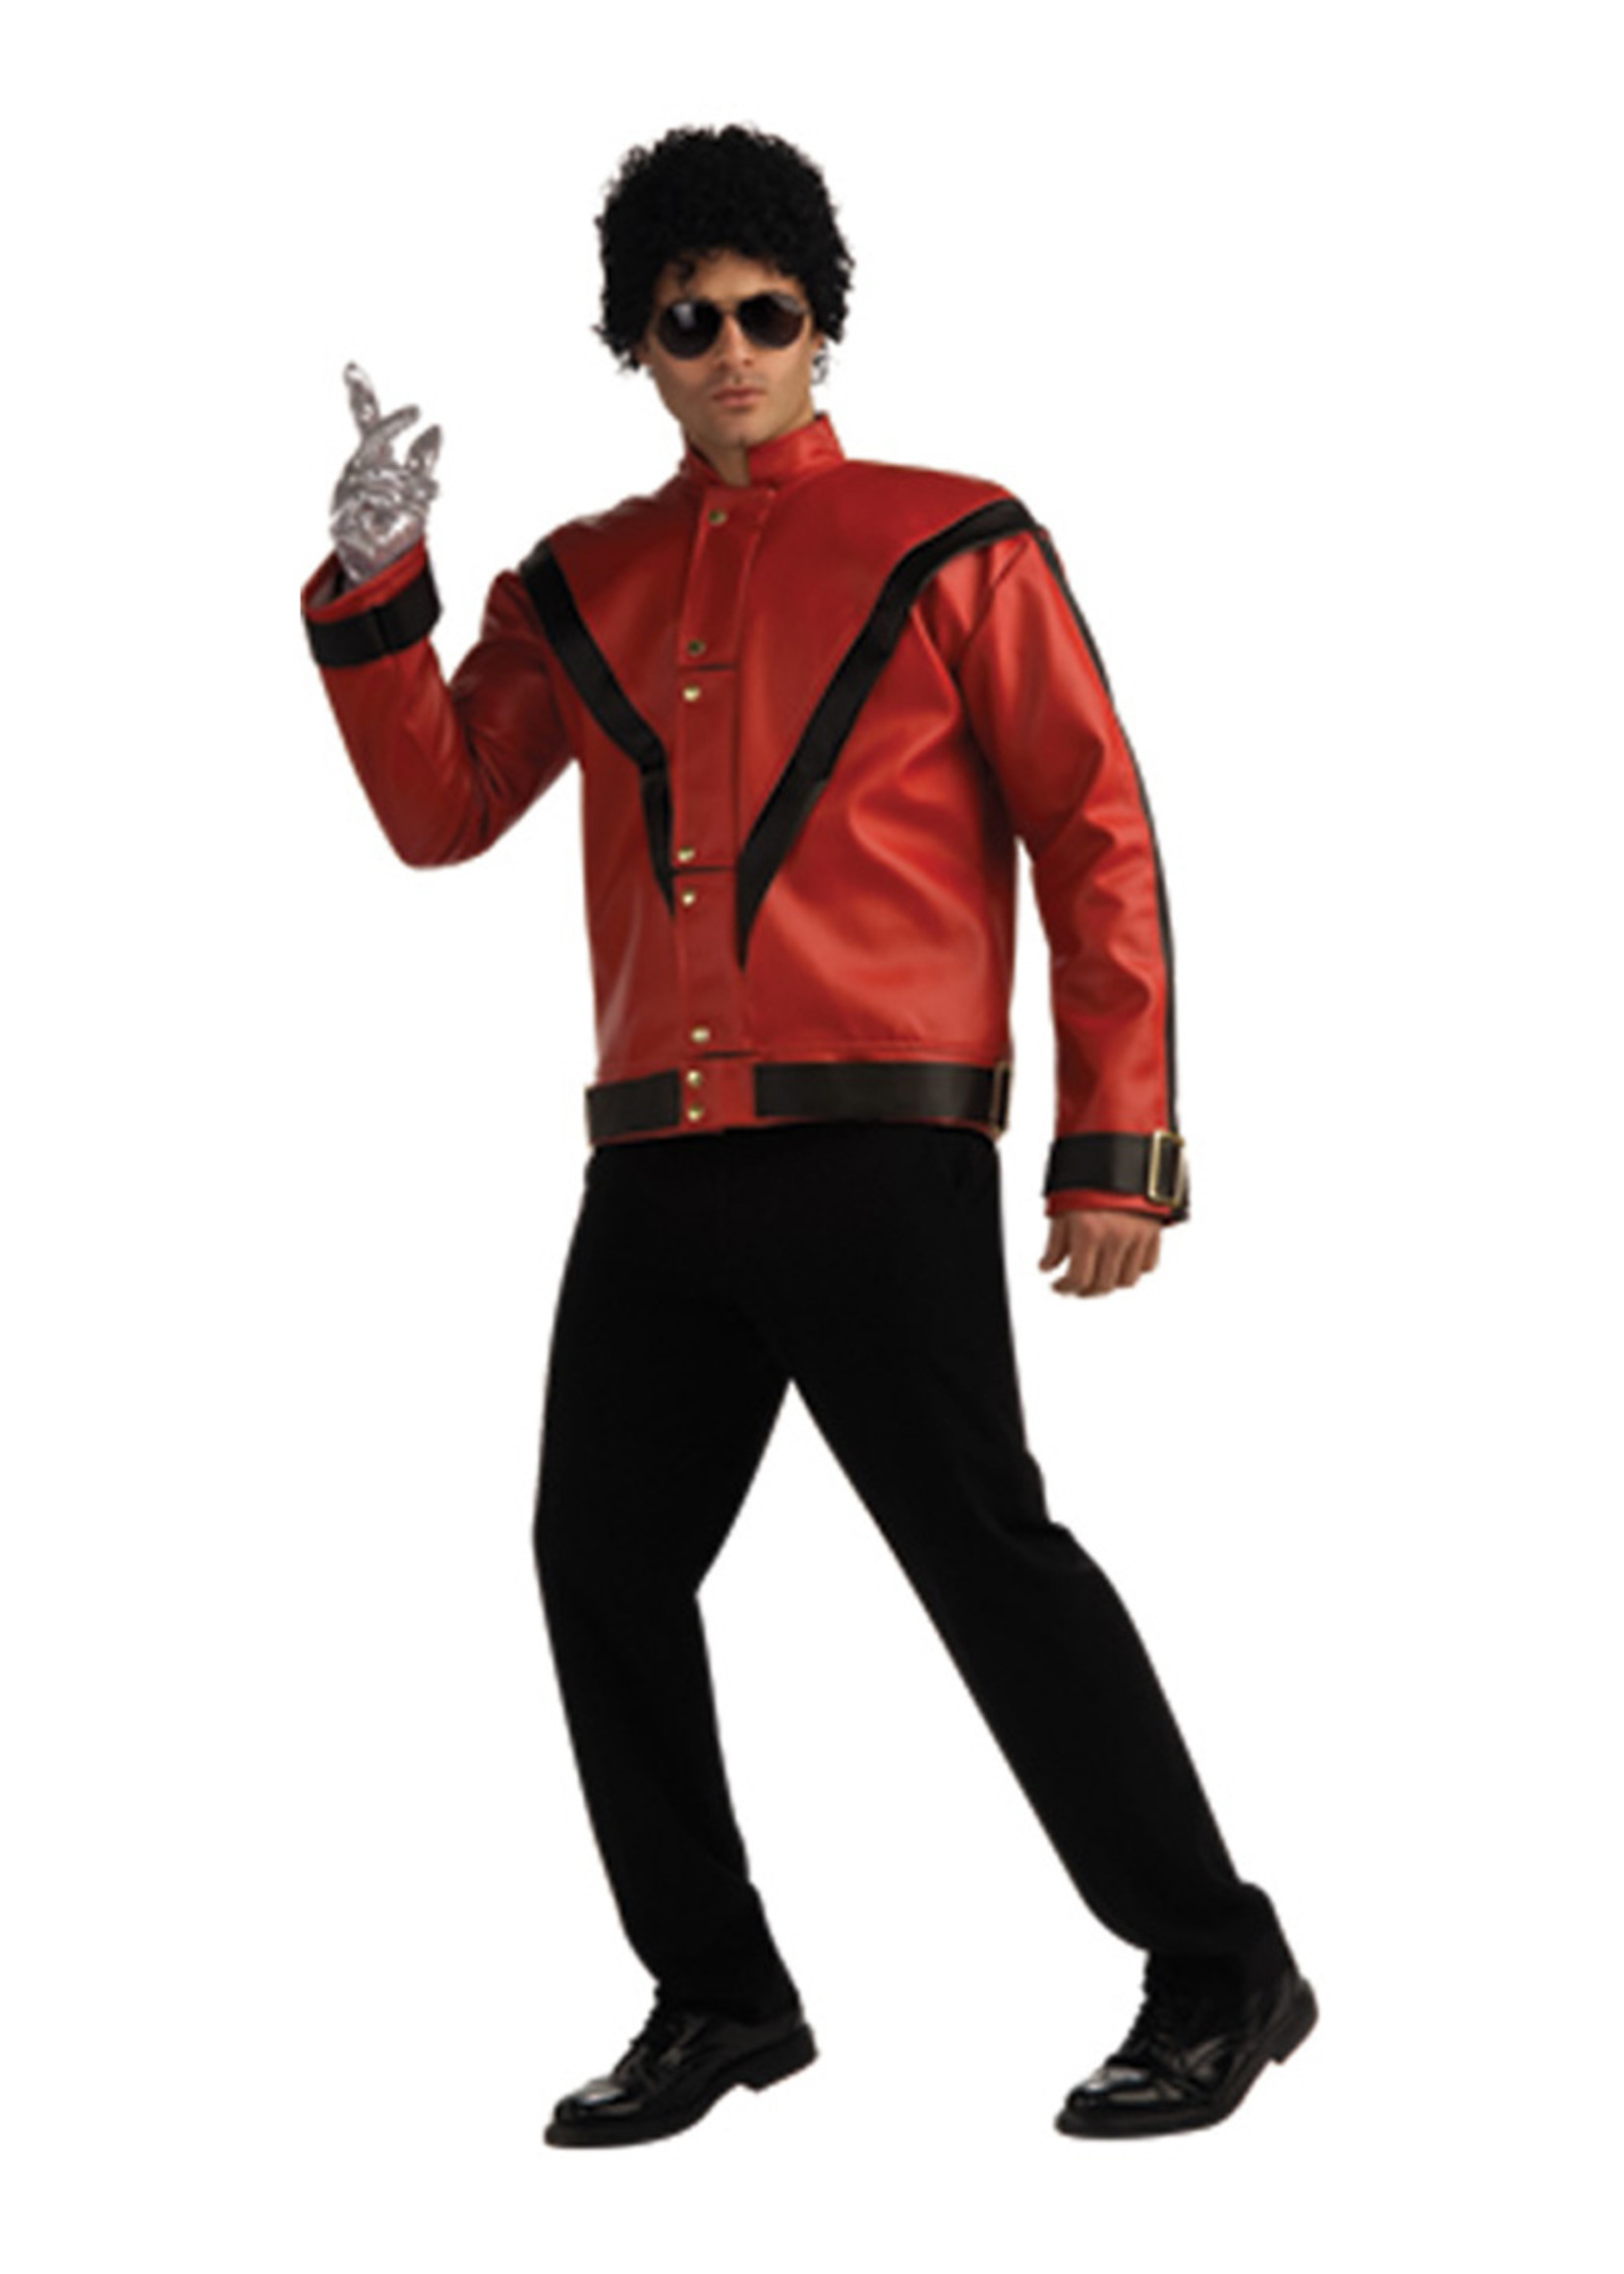 Michael Jackson Bad Tour Thriller Jacket - Lot 704  Michael jackson  outfits, Michael jackson merchandise, Michael jackson thriller